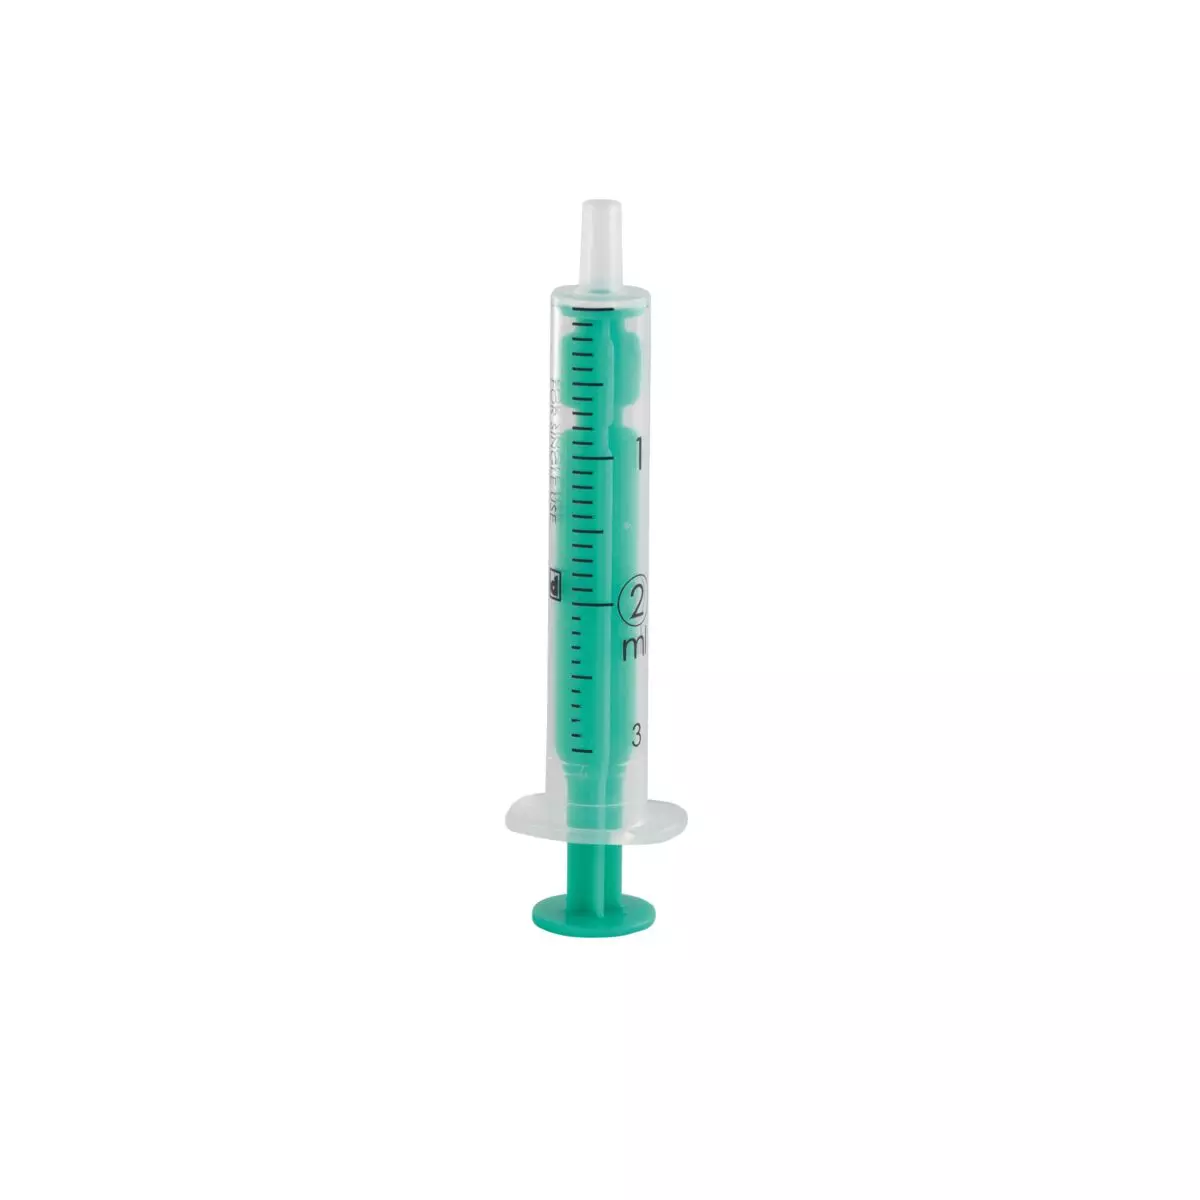 Disposable syringe, sterile - 100 pcs, 2 ml